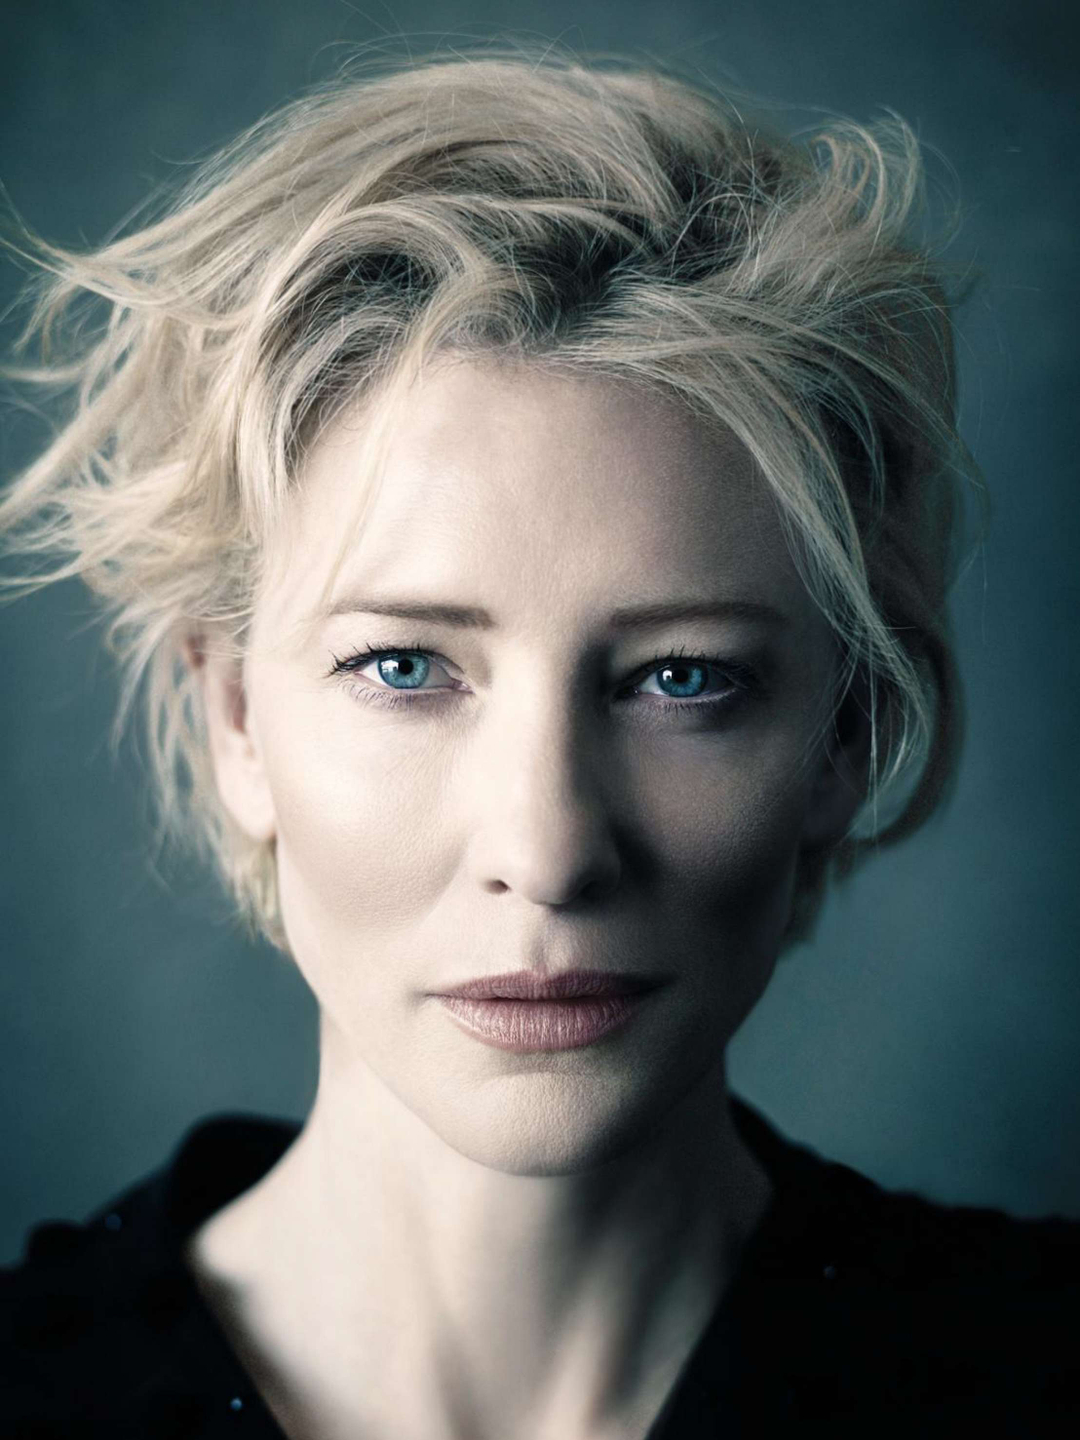 Cate Blanchett way to fame